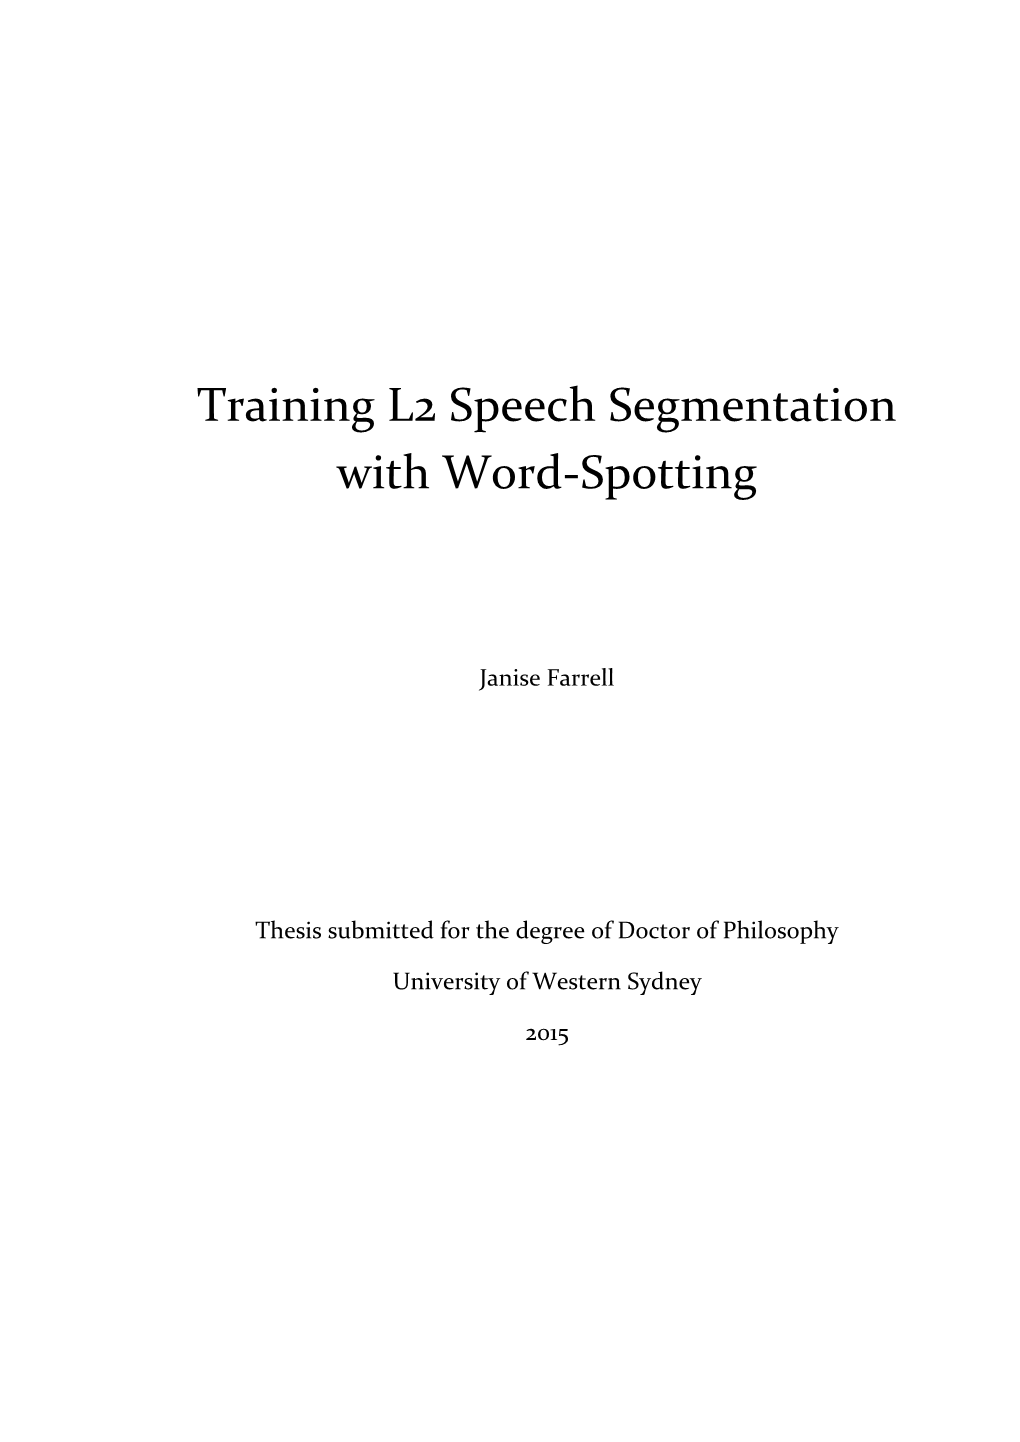 Training L2 Speech Segmentation with Word-Spotting